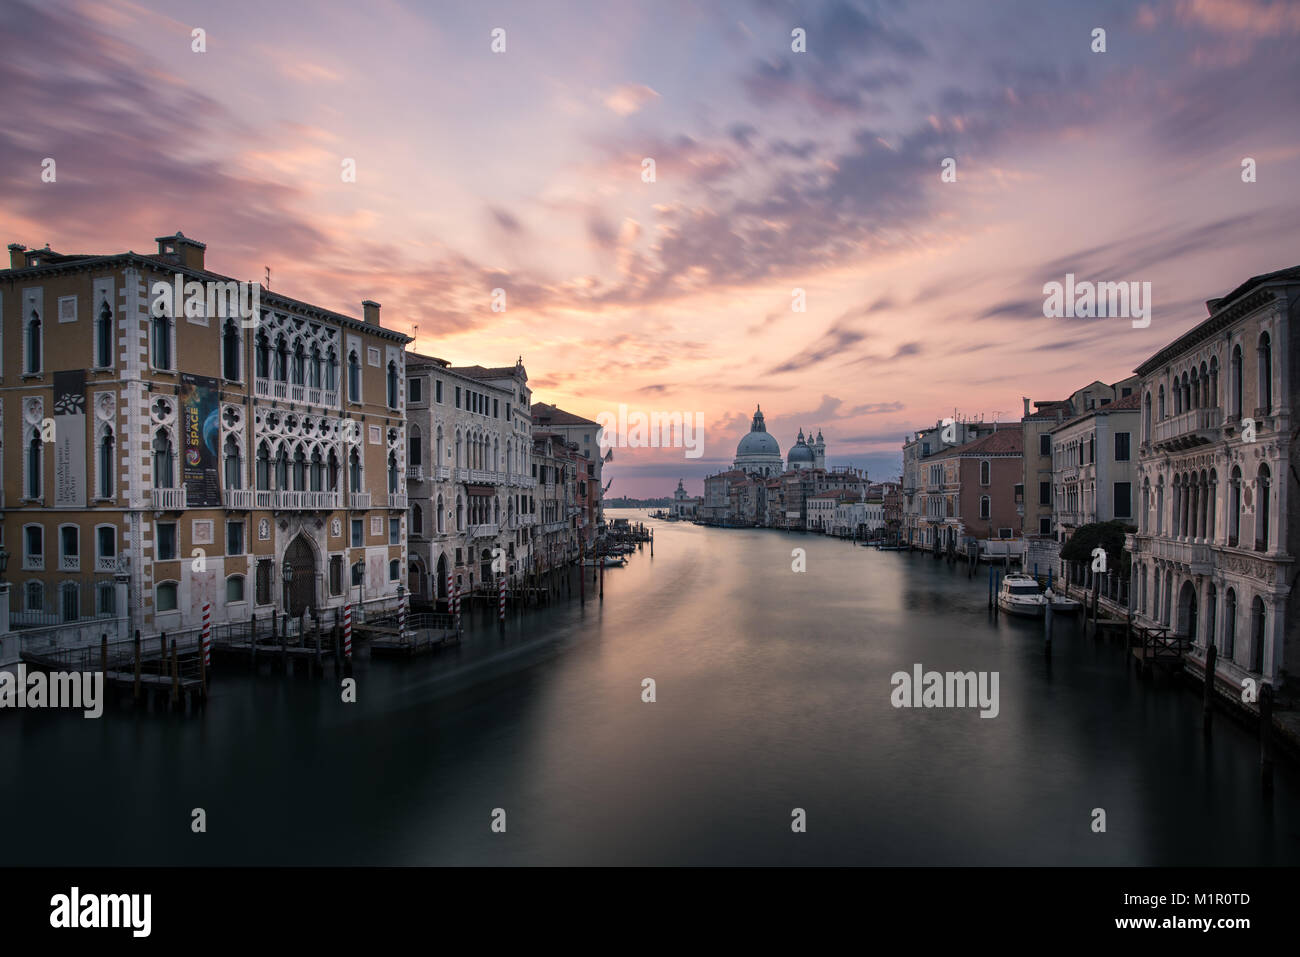 Classic view of Grand Canal seen from Accademia Bridge with Basilica di Santa Maria della Salute in the background during sunrise. Venice, Italy 2017 Stock Photo